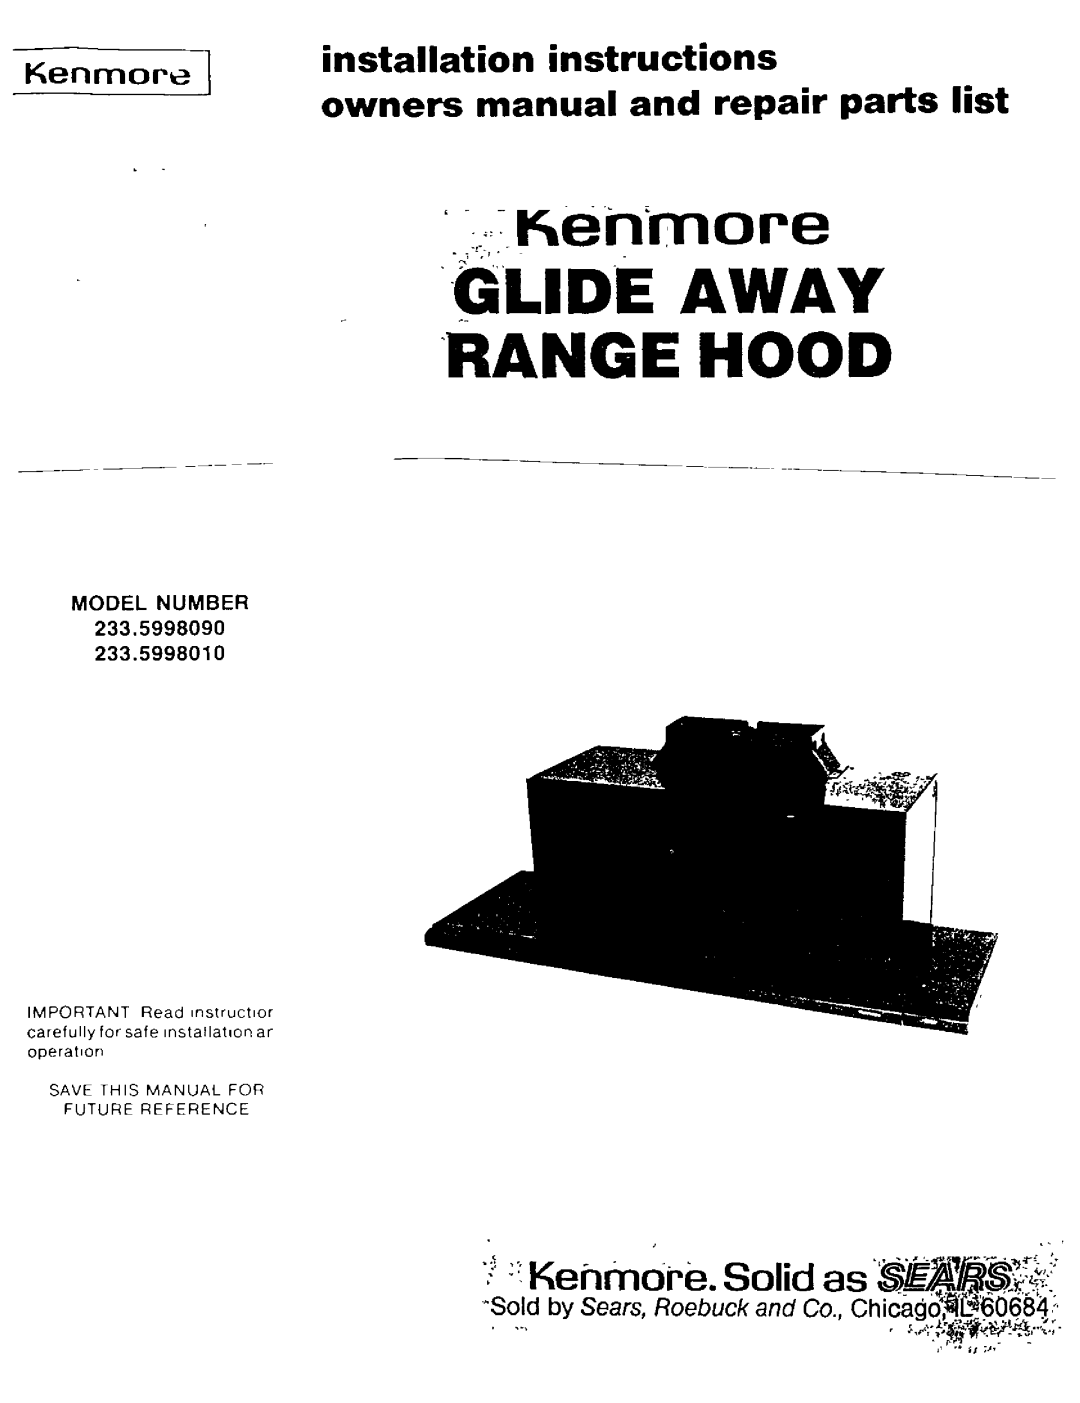 Kenmore 233.599801 owner manual Sold by Sears Roebuck and Co. Chicagq, Model Number, Glide Away, Range Hood, enmore 